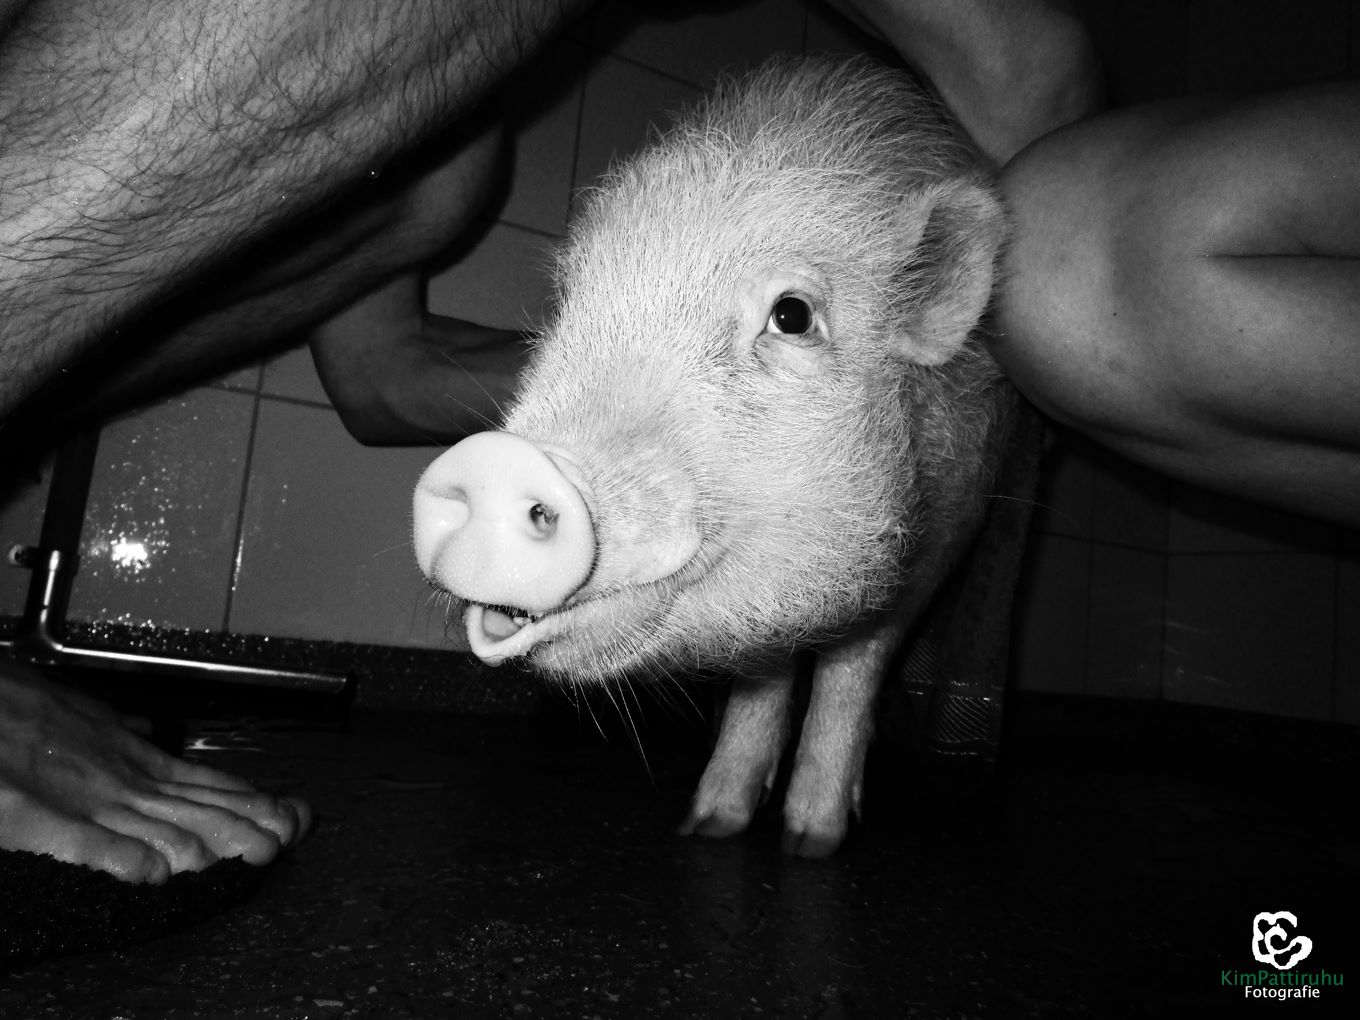 Francis Bacon onder de douche – foto Kim Pattiruhu